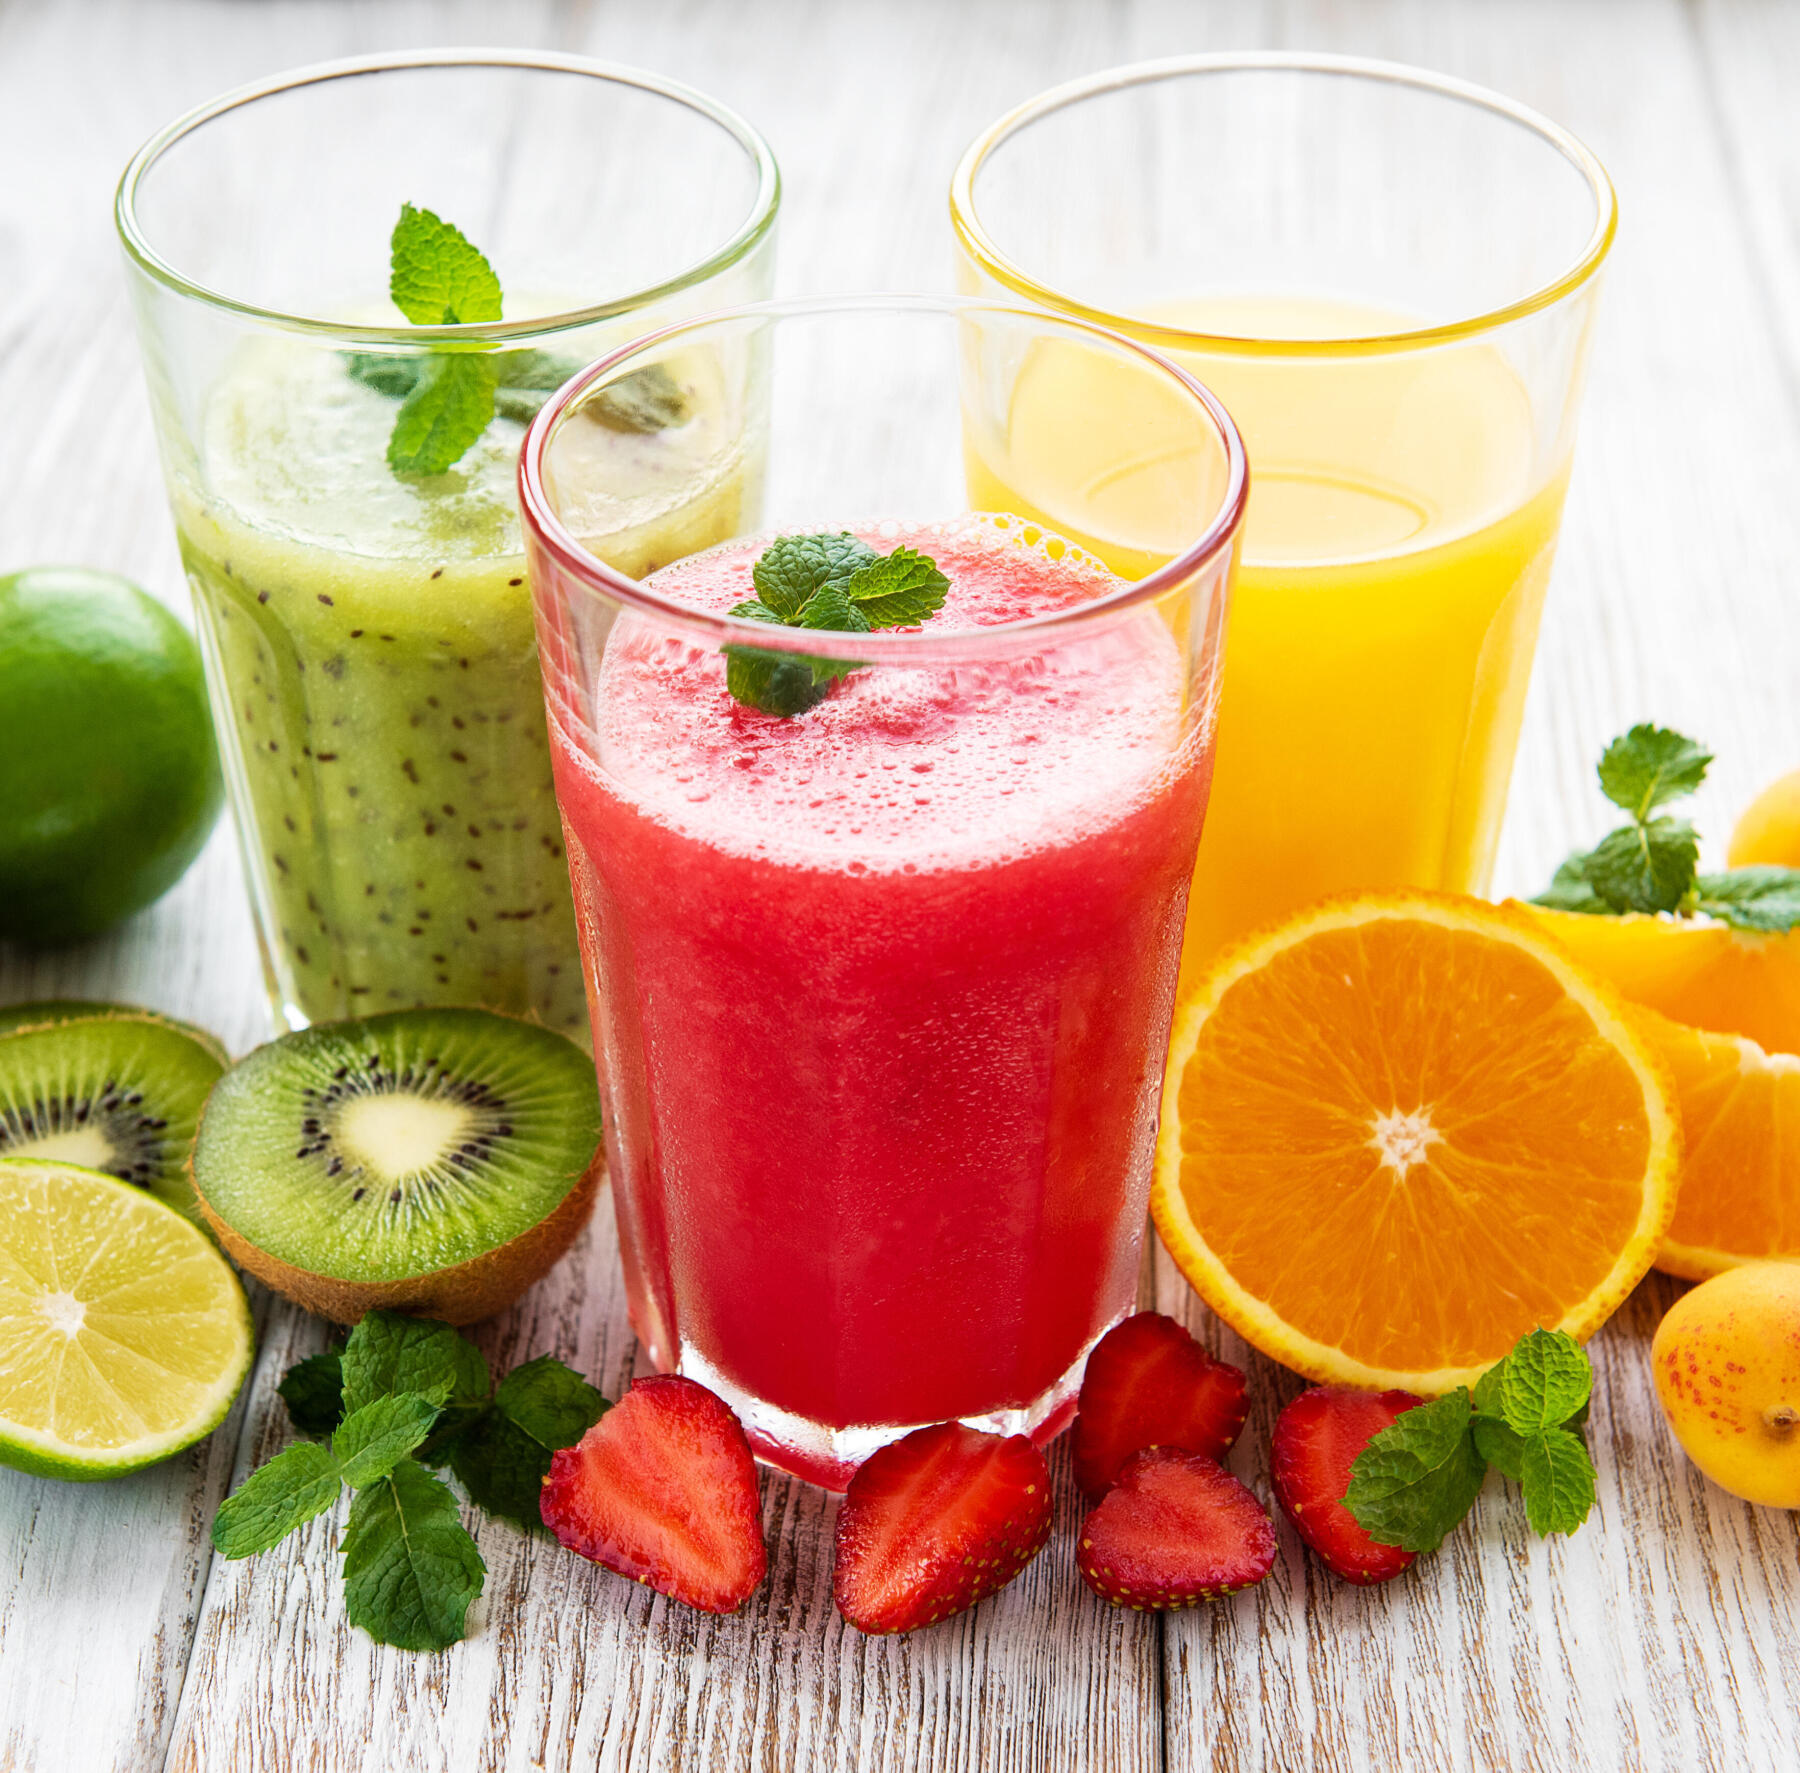 Fake health foods: fruit juice